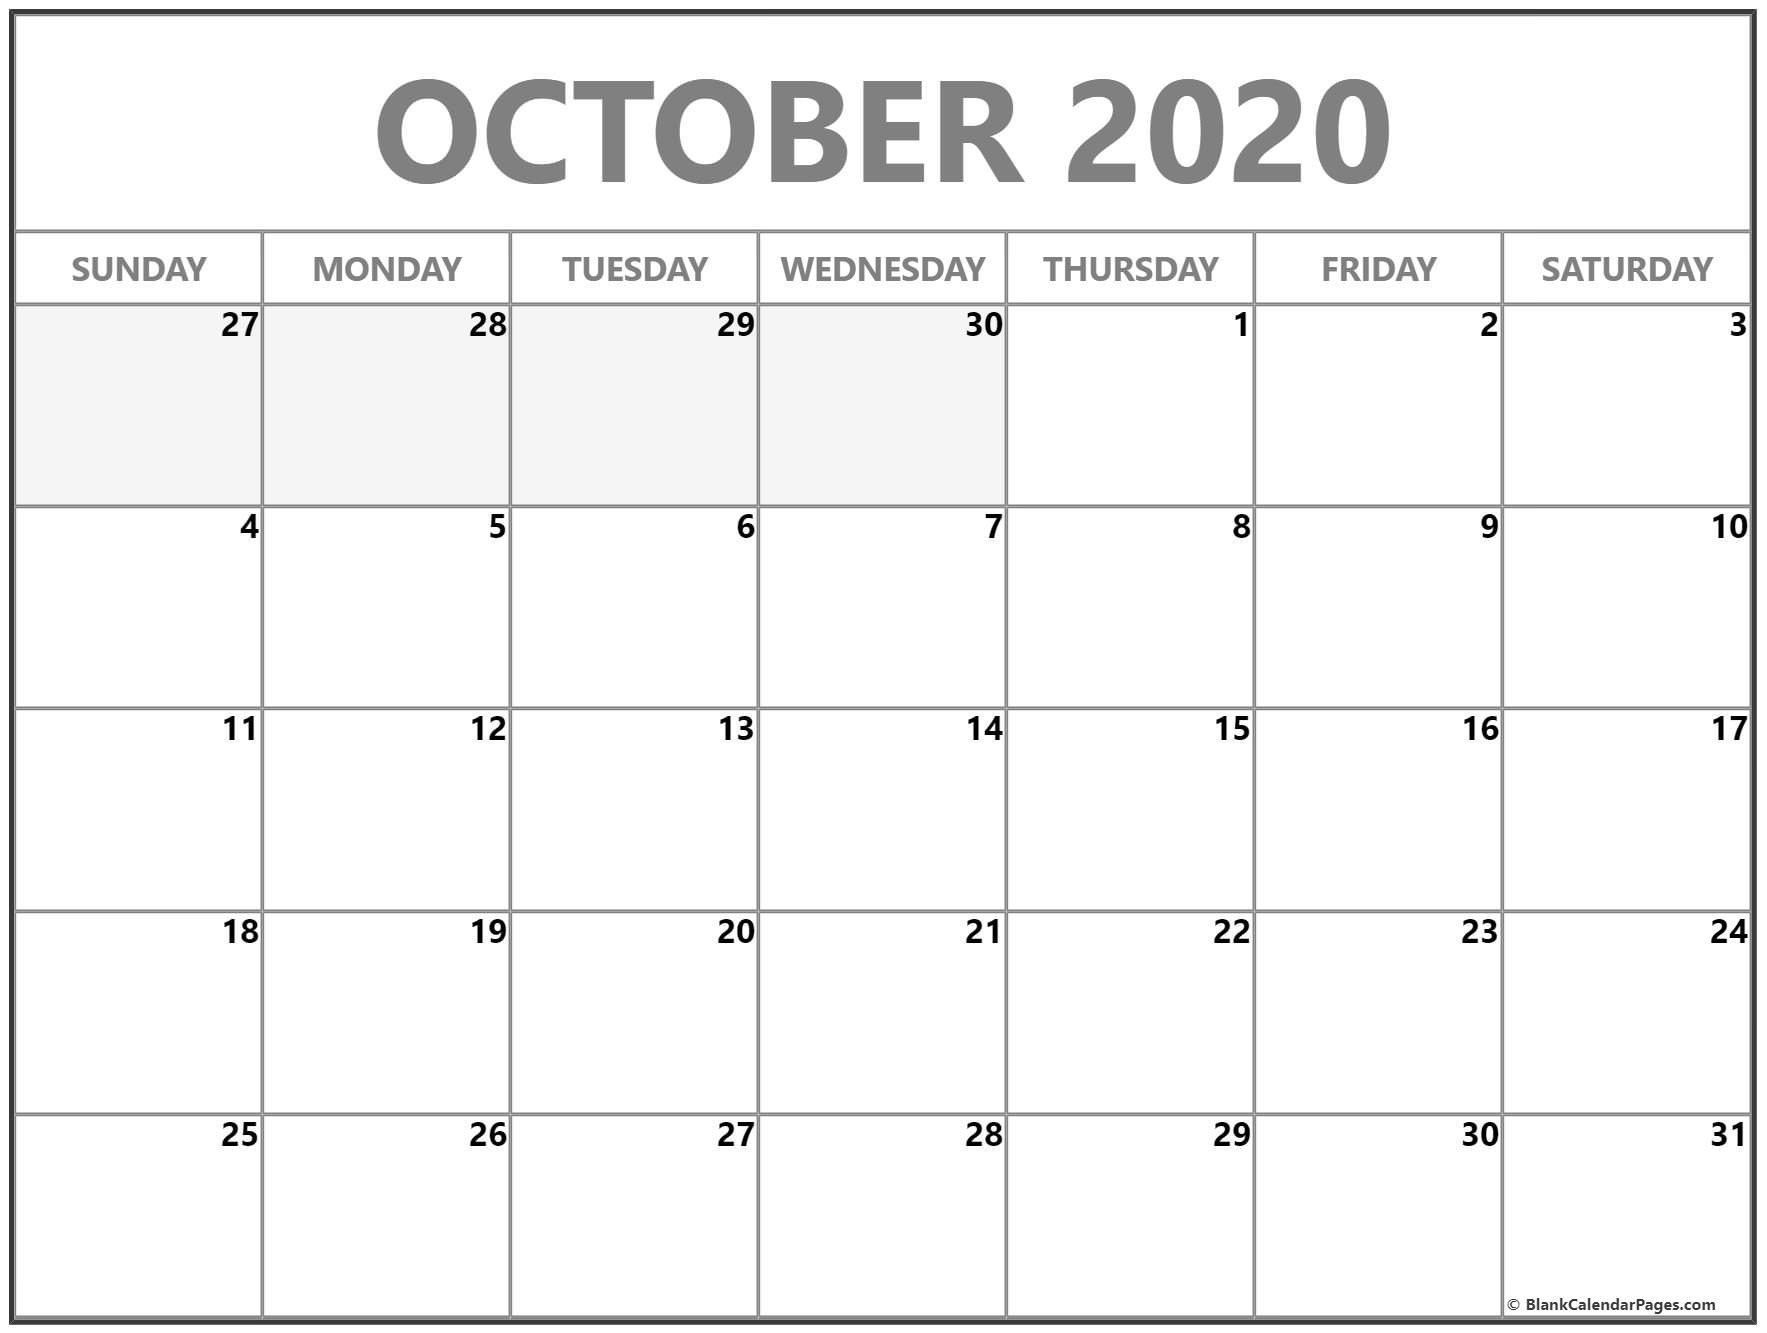 October 2020 calendar